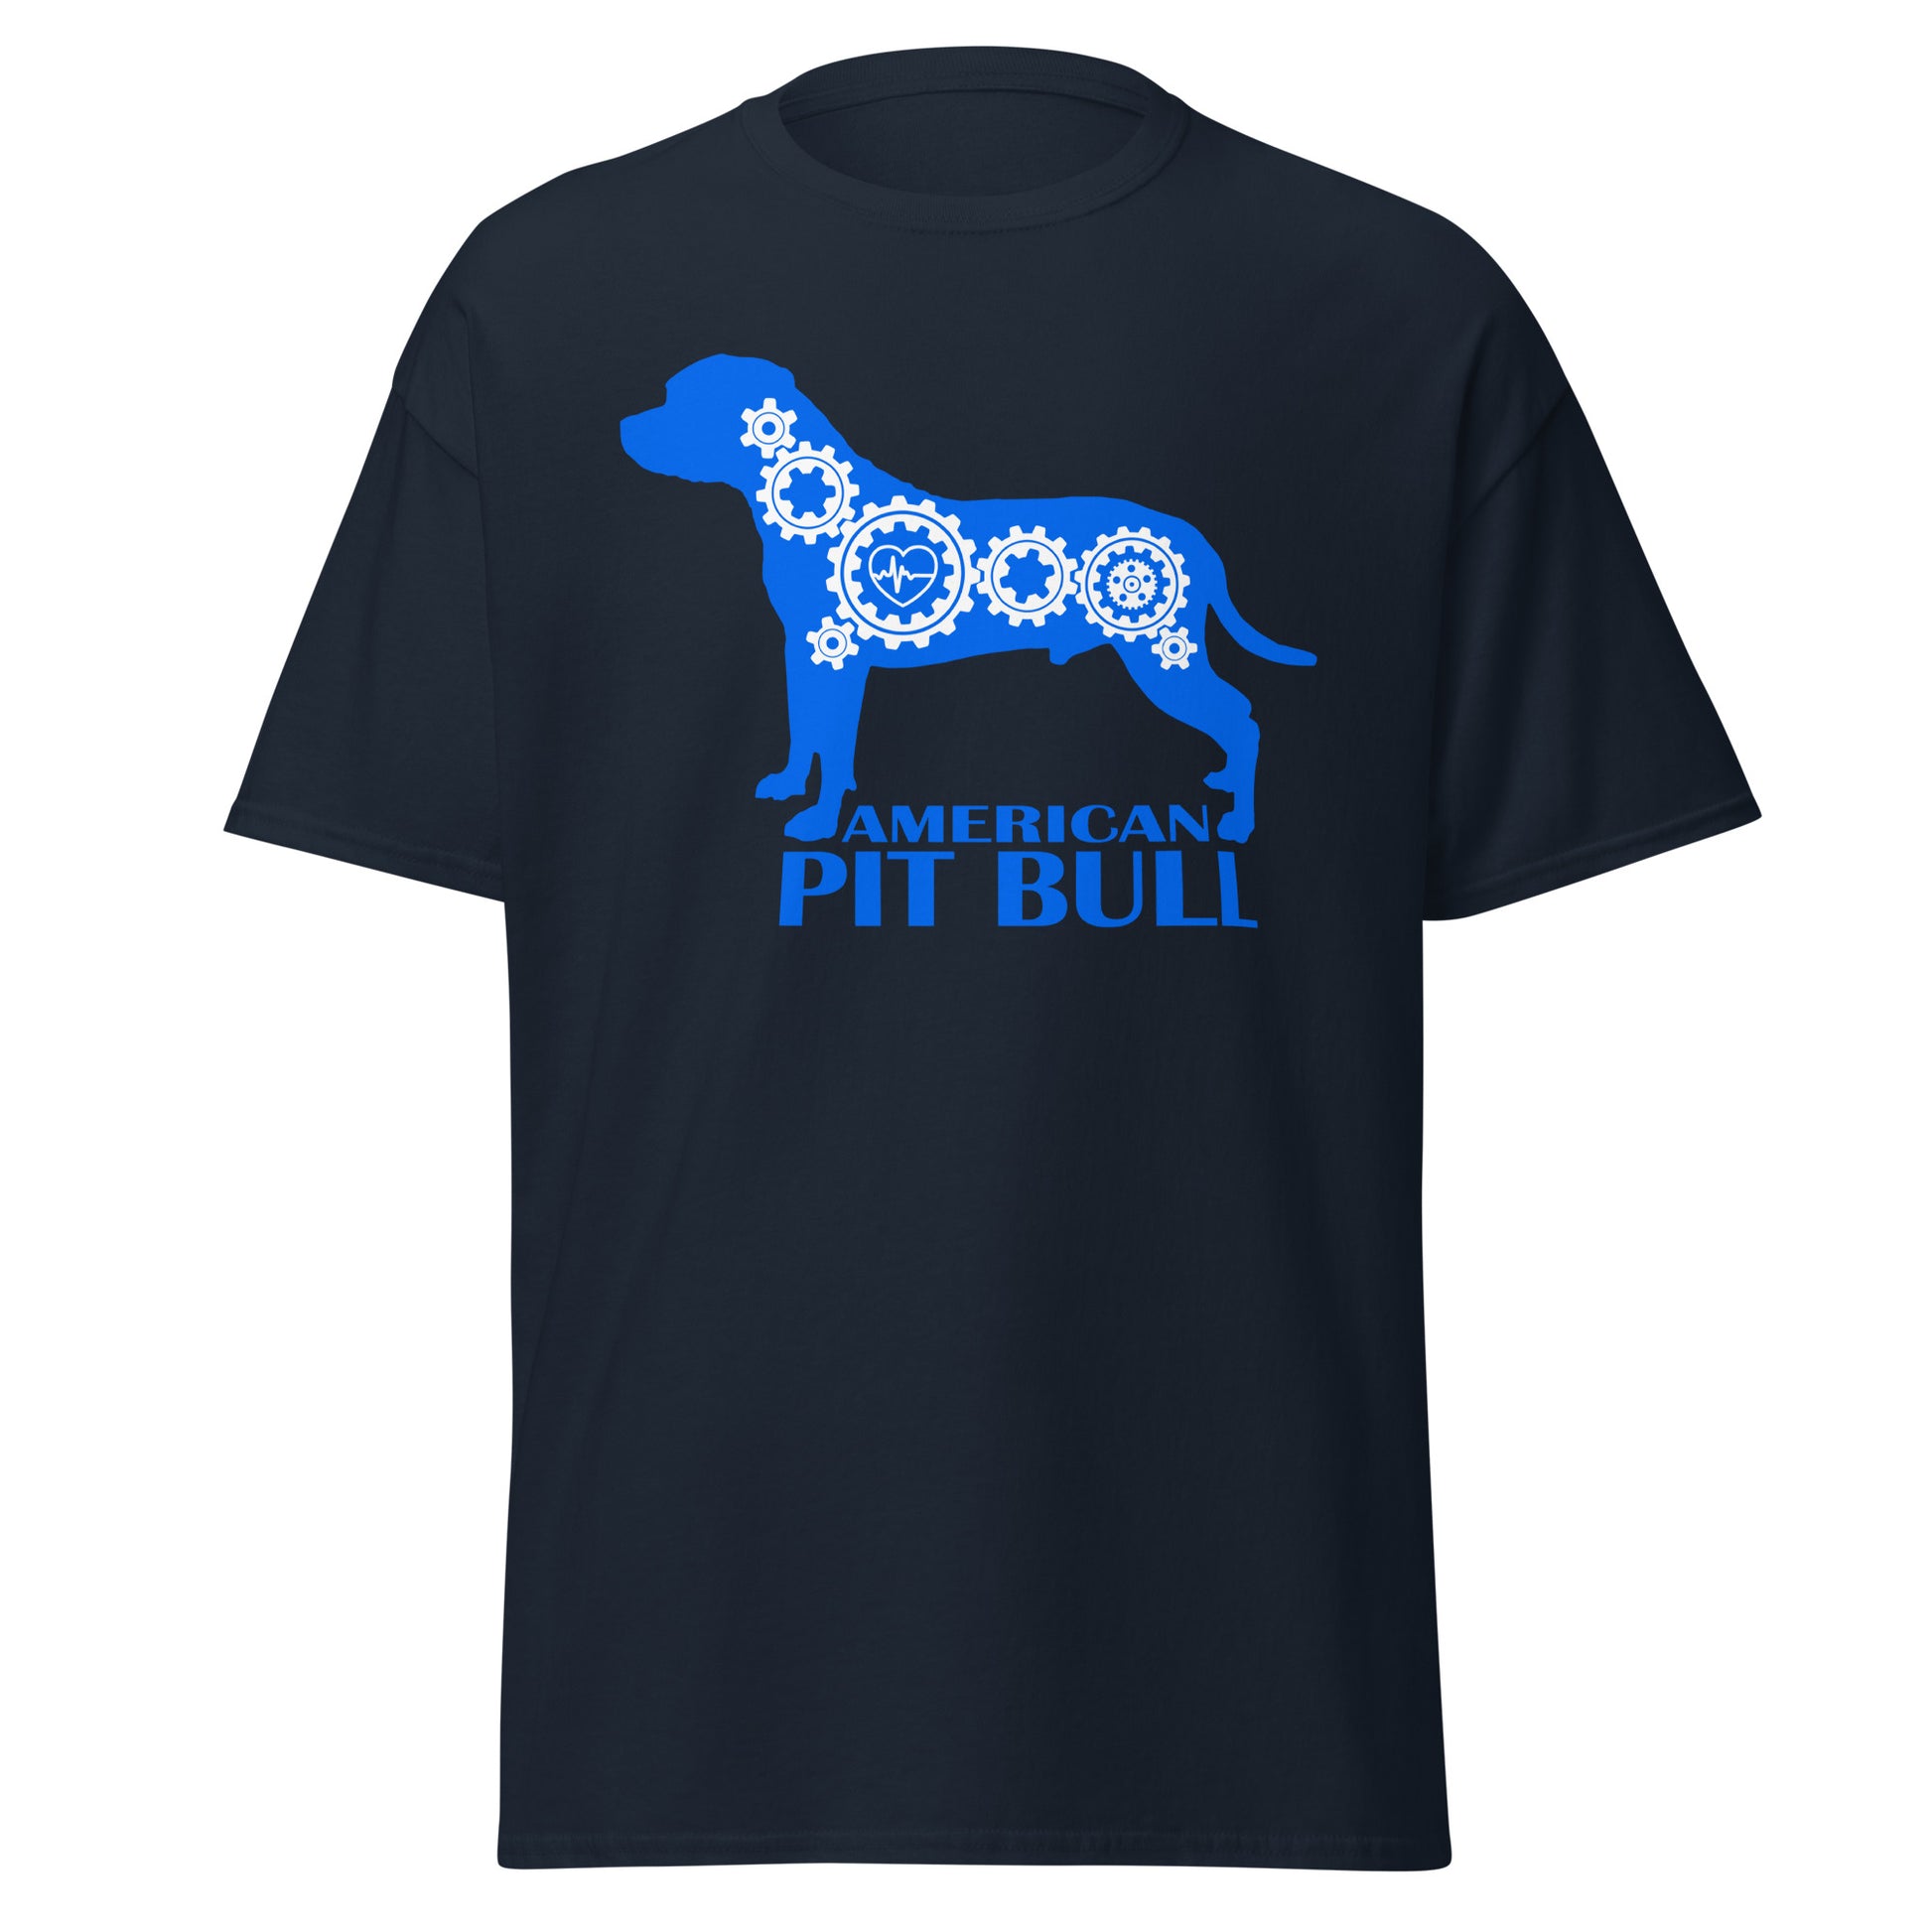 American Pit Bull Bionic men’s navy t-shirt by Dog Artistry.